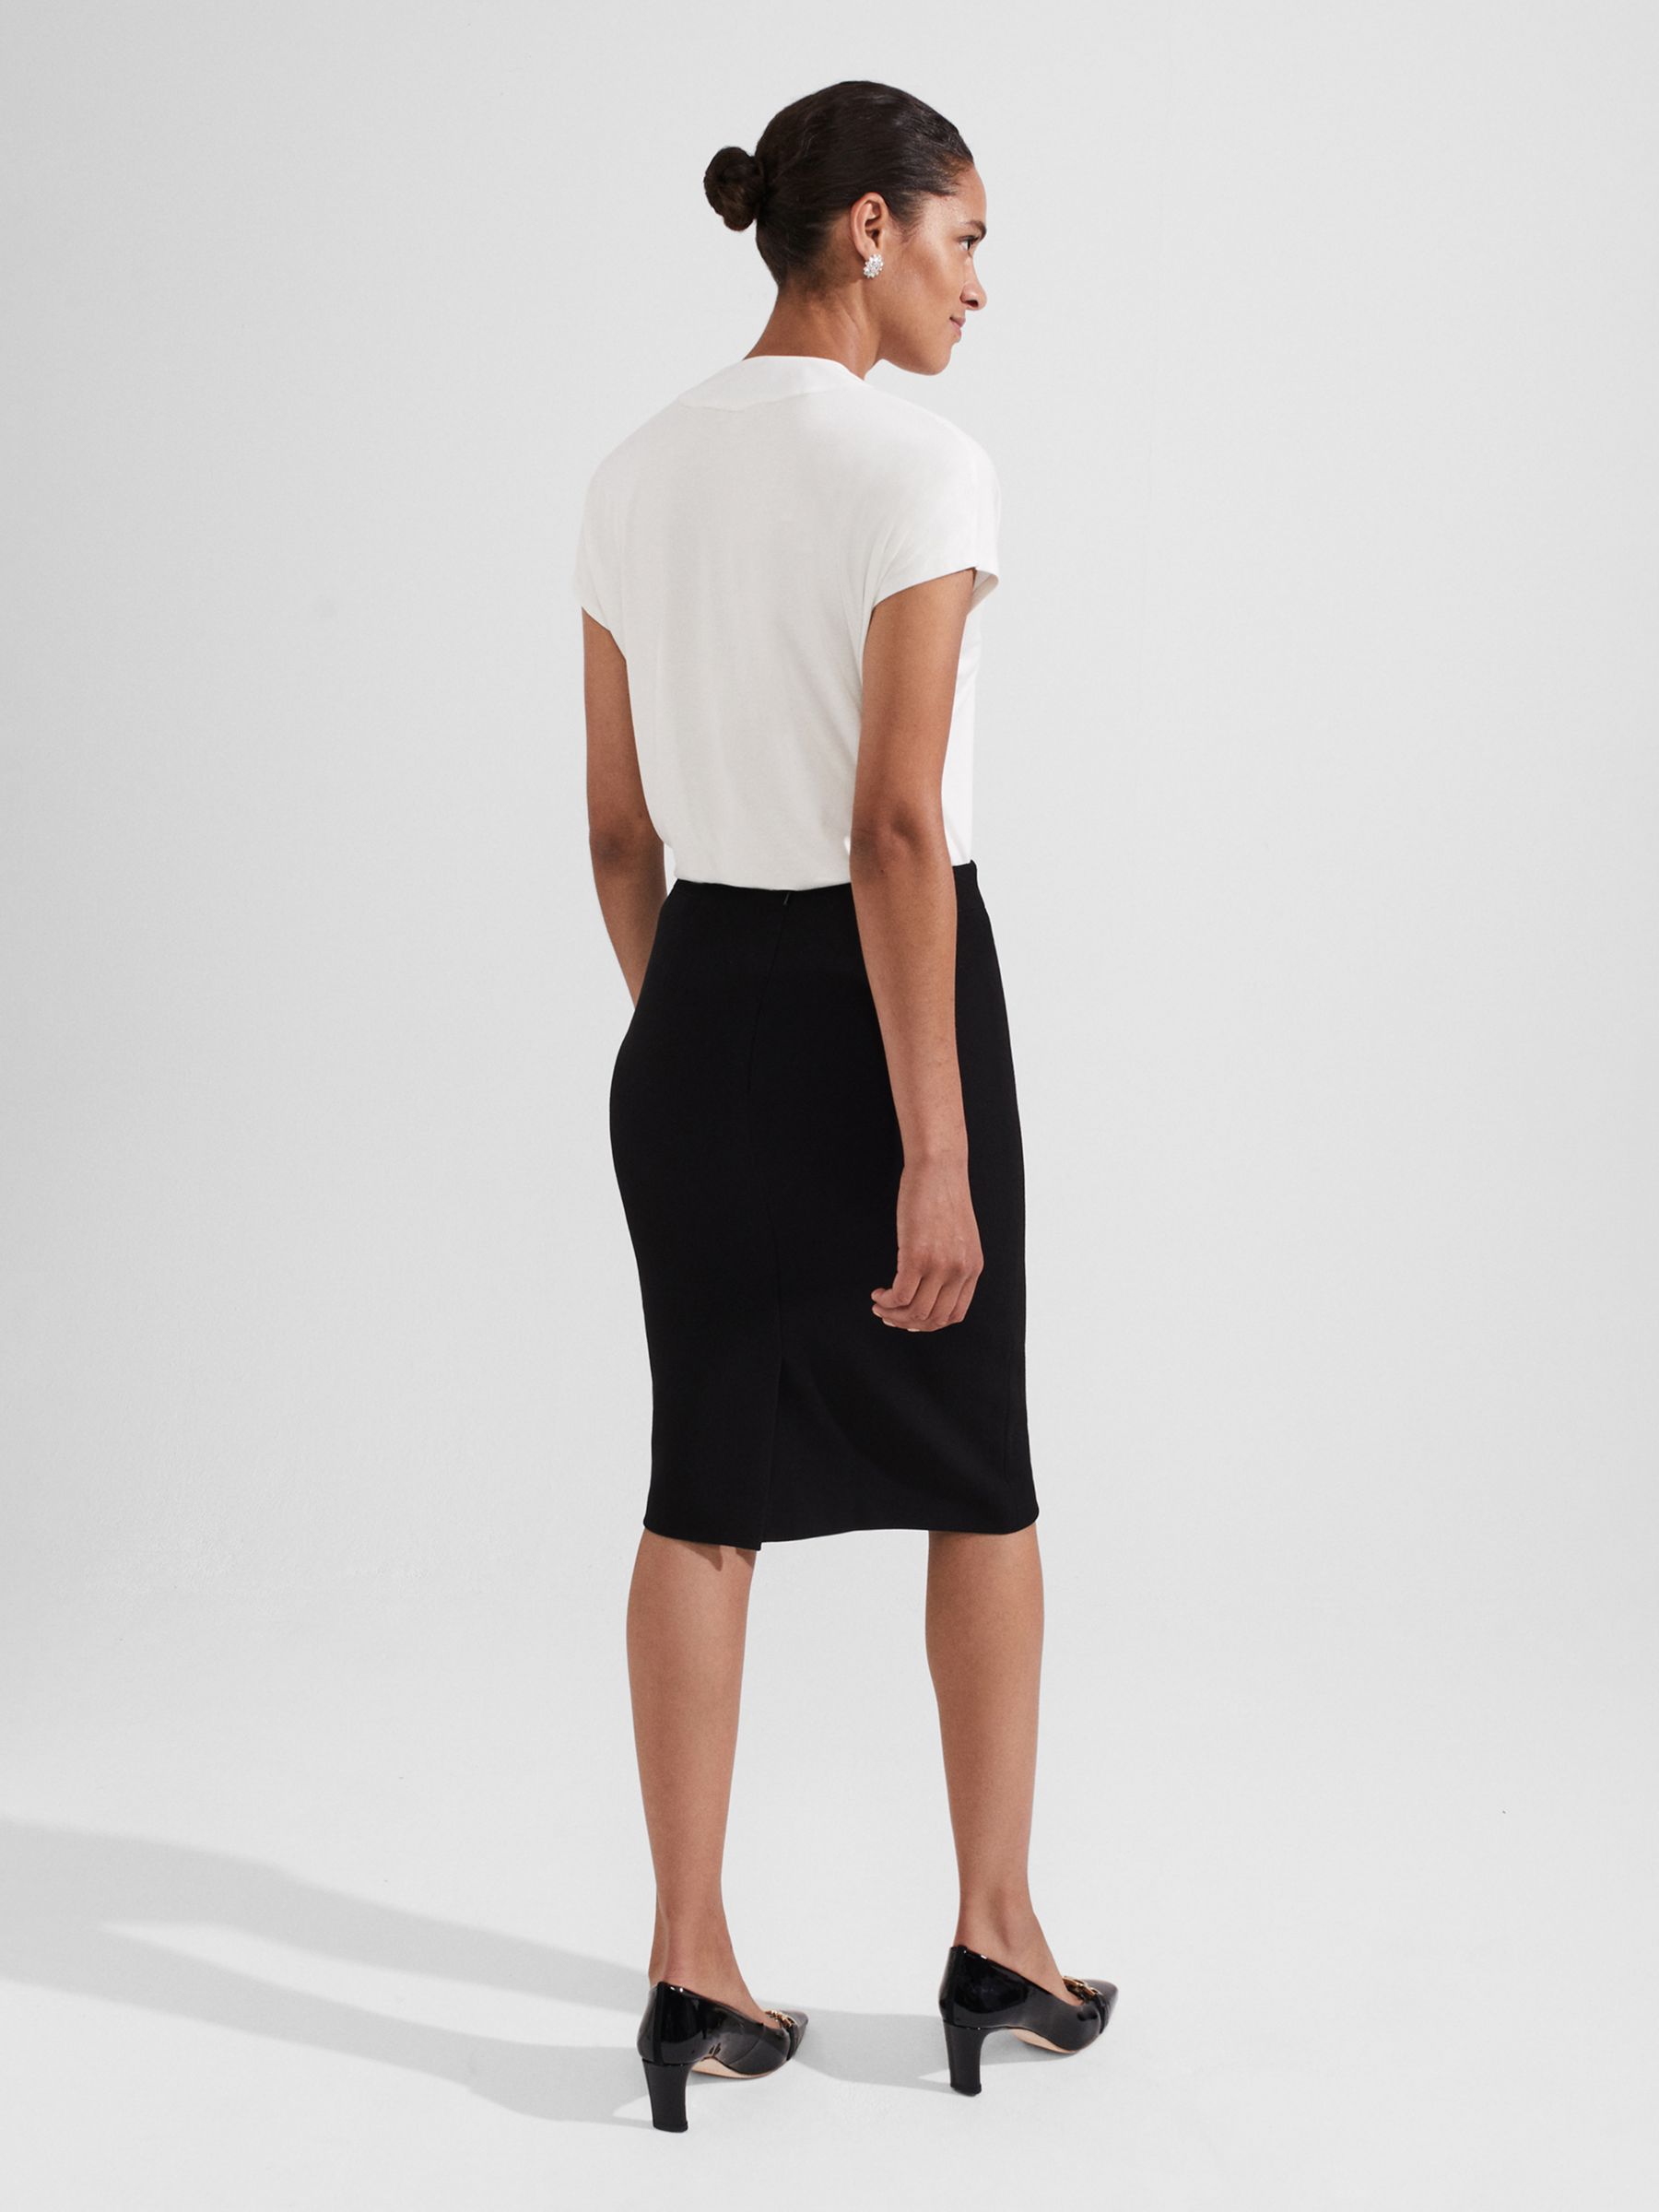 Hobbs Petite Charley Pencil Skirt, Black at John Lewis & Partners